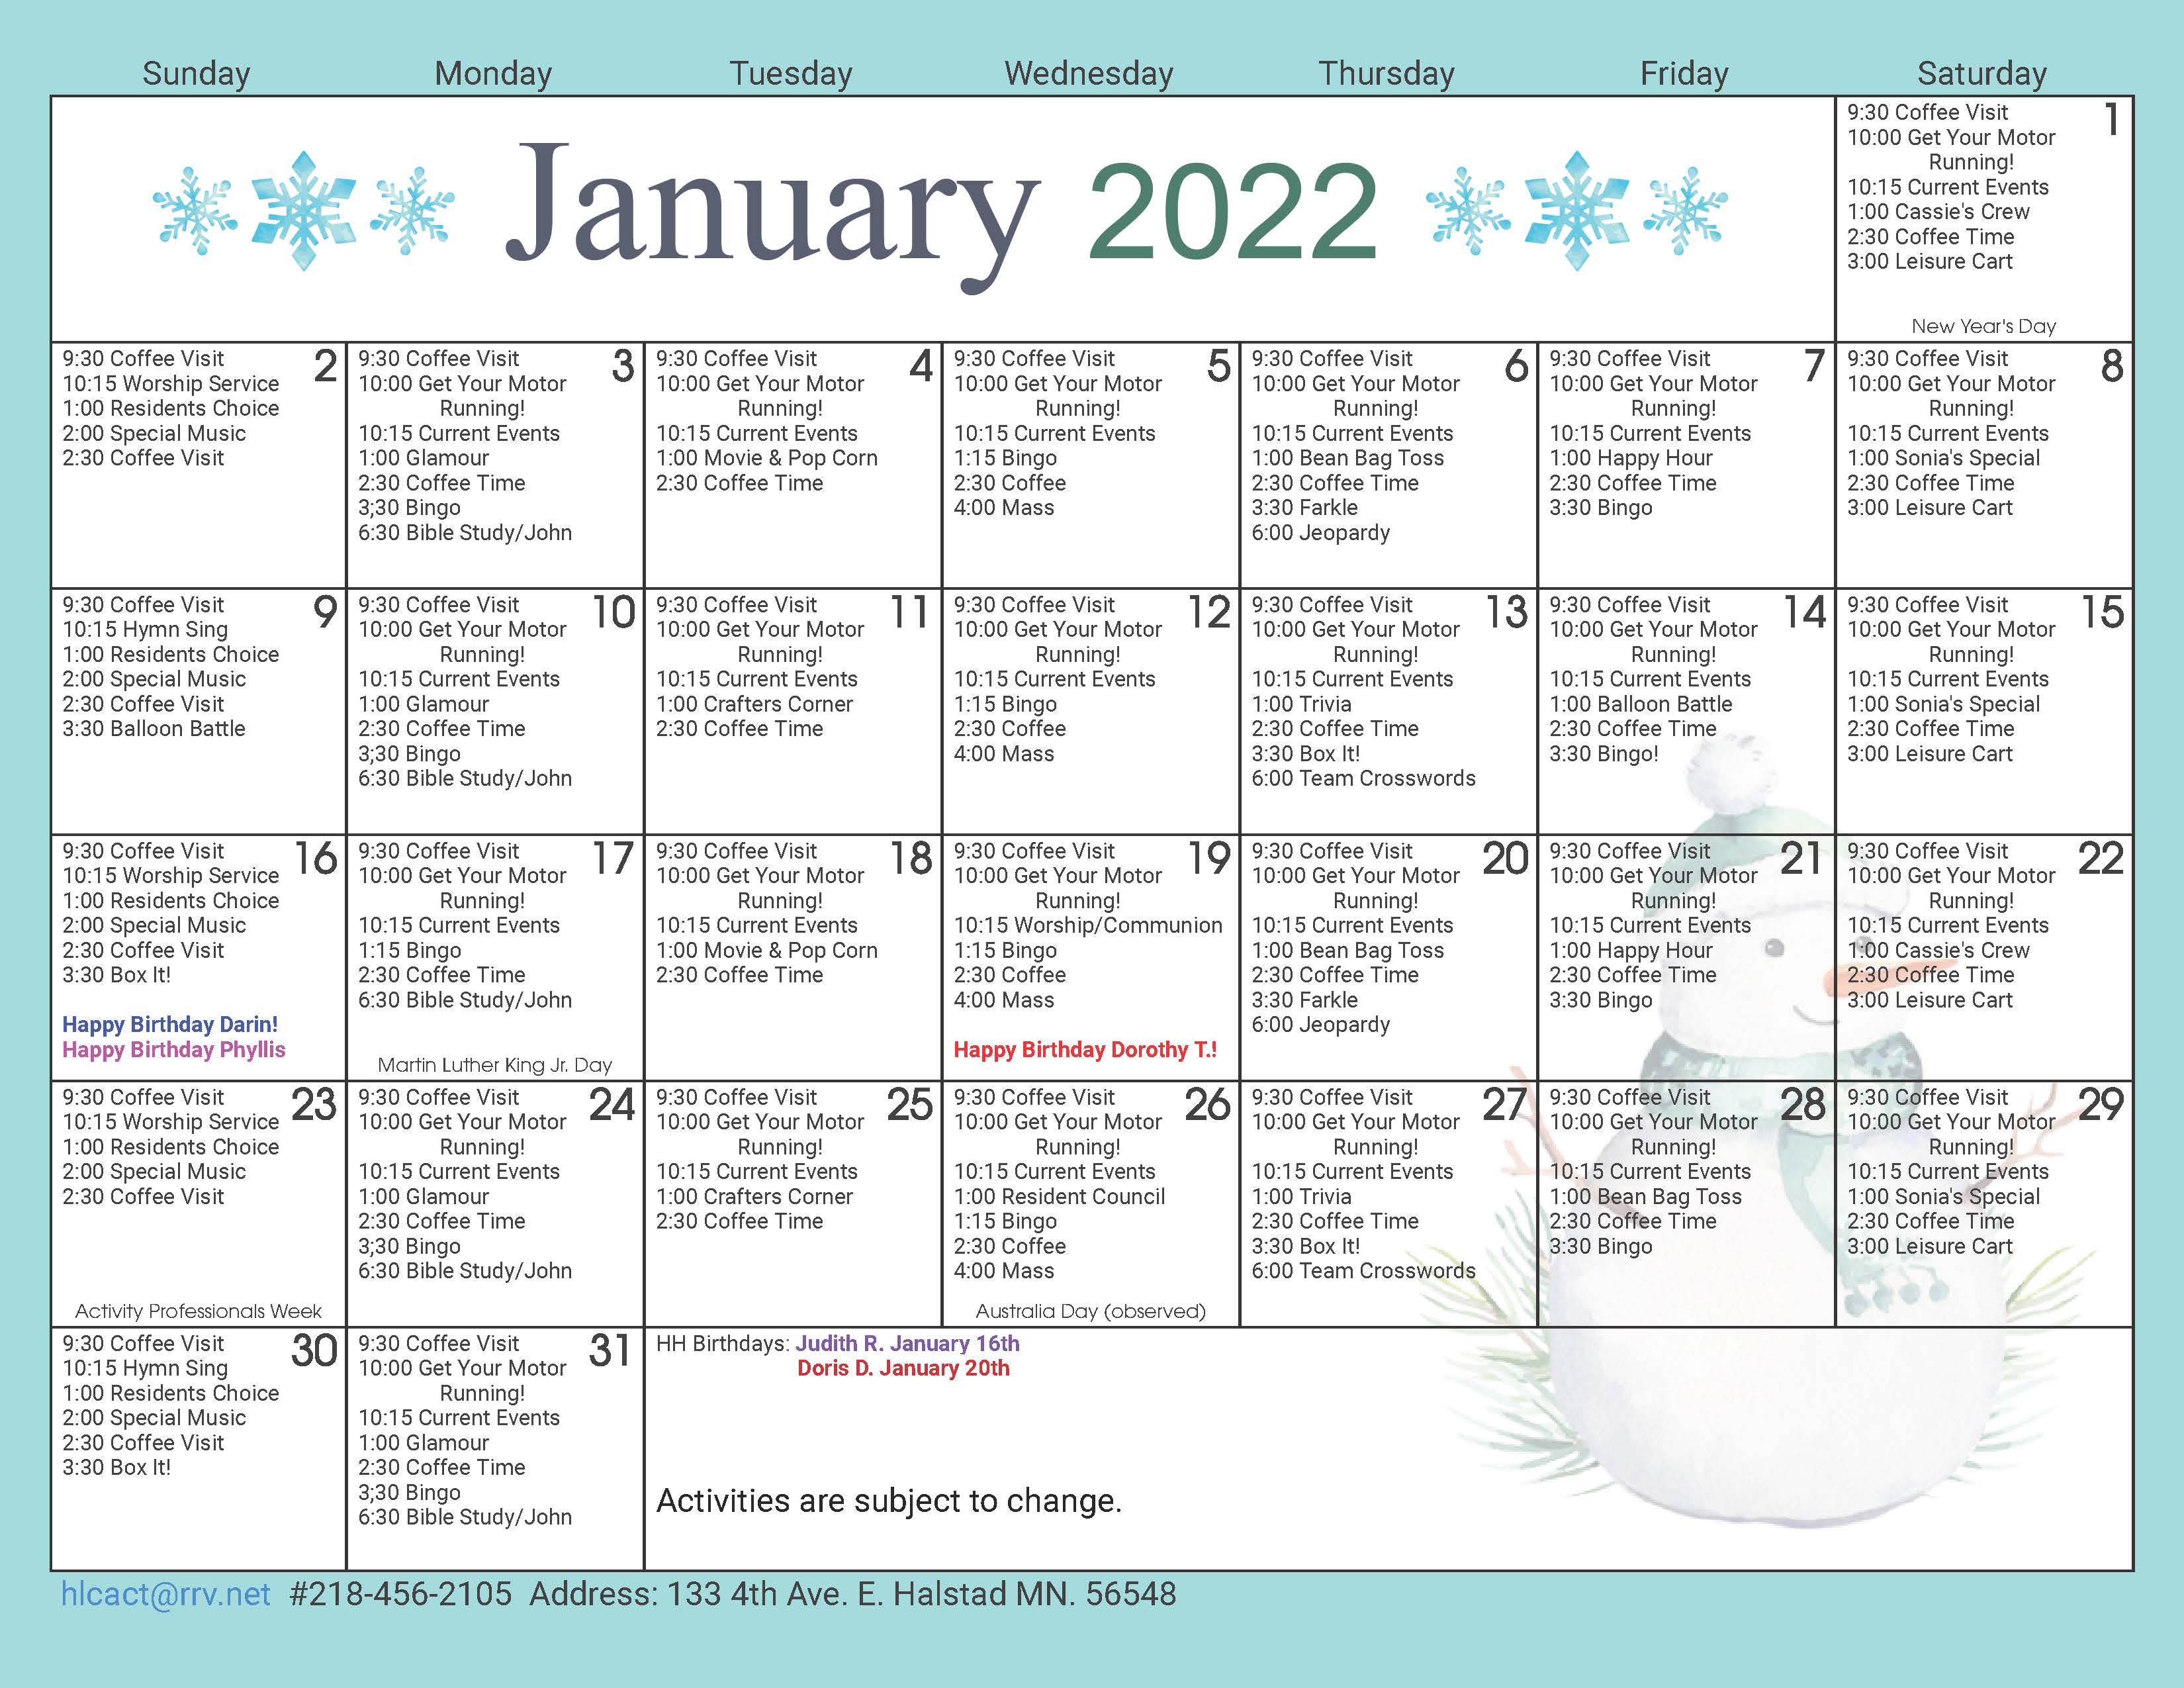 January 2022 Calendar.jpg